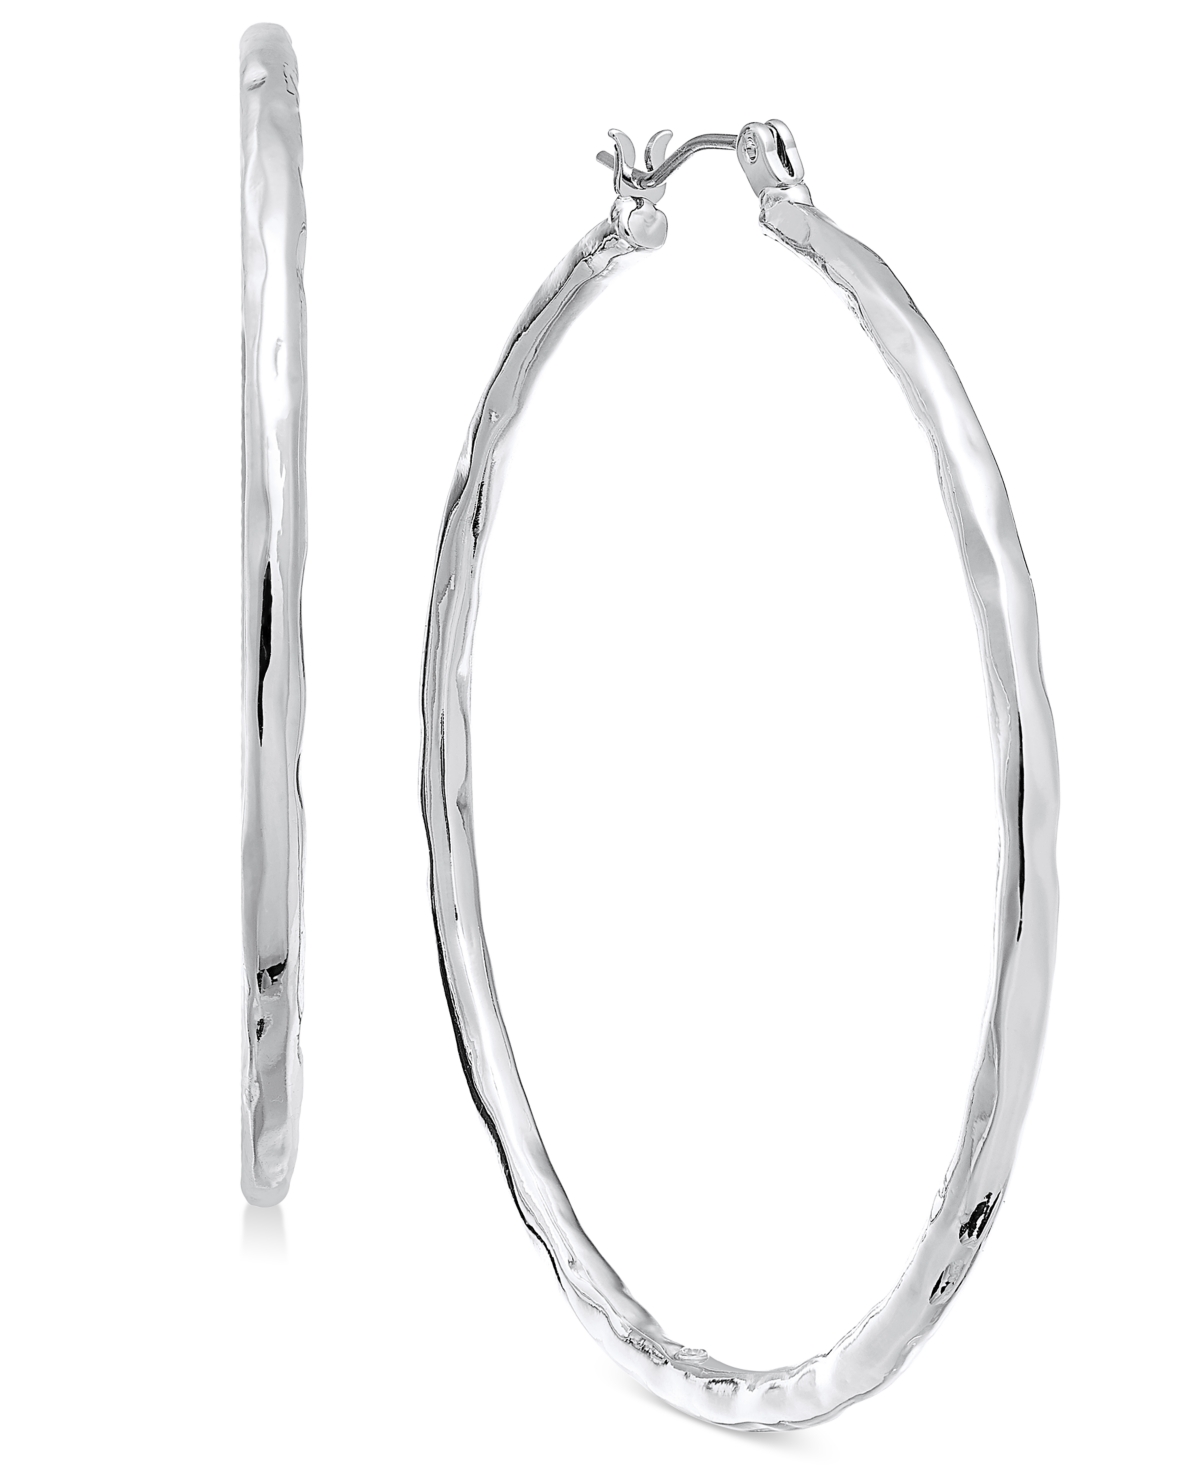 Medium Hammered Hoop Earrings, 2", Created for Macy's - Silver